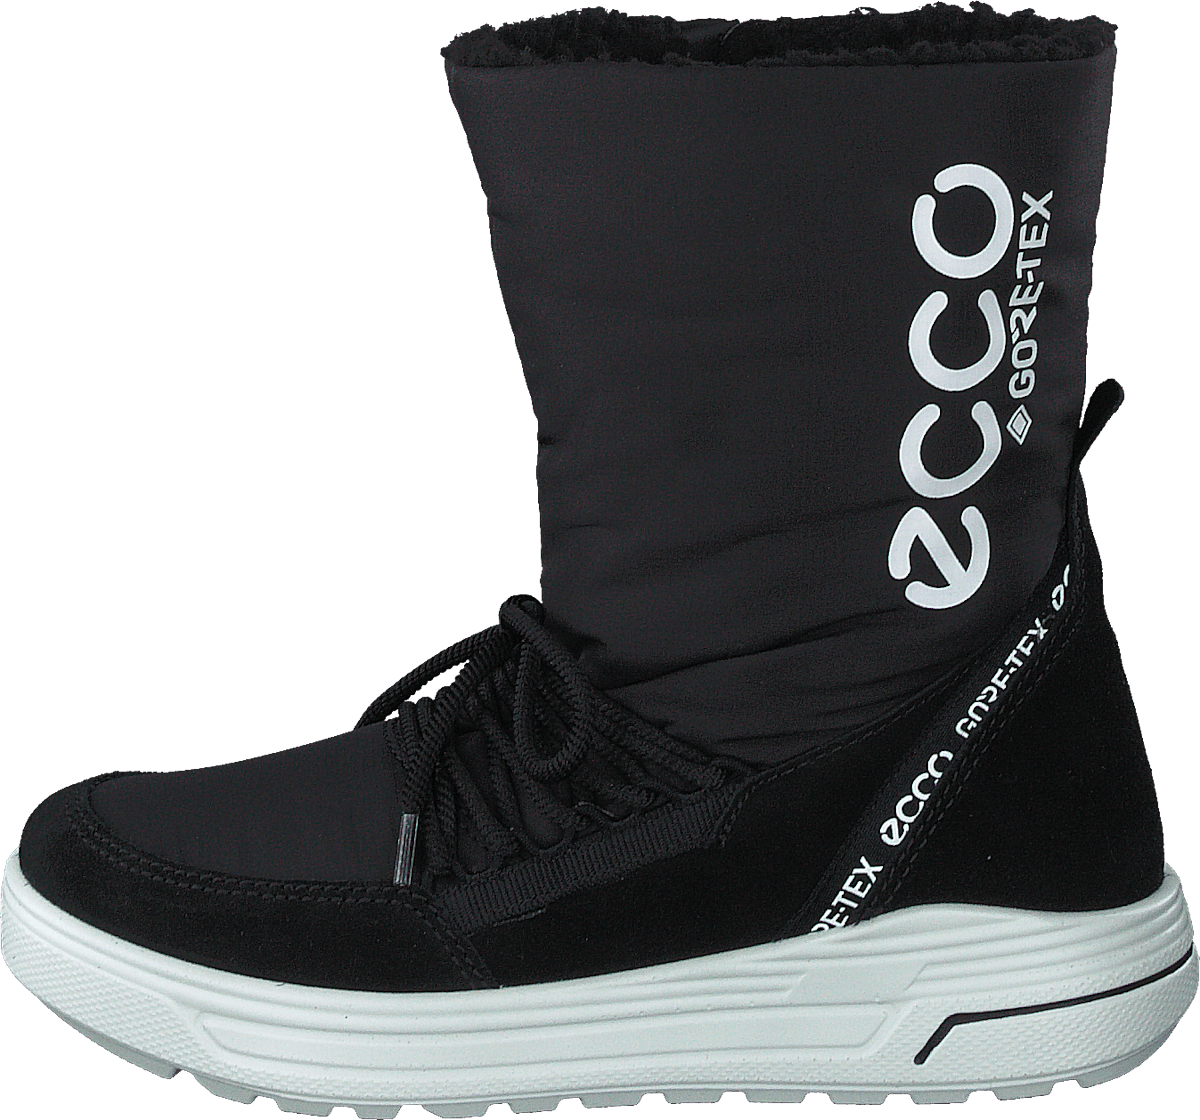 Ecco Urban Snowboarder Black/black